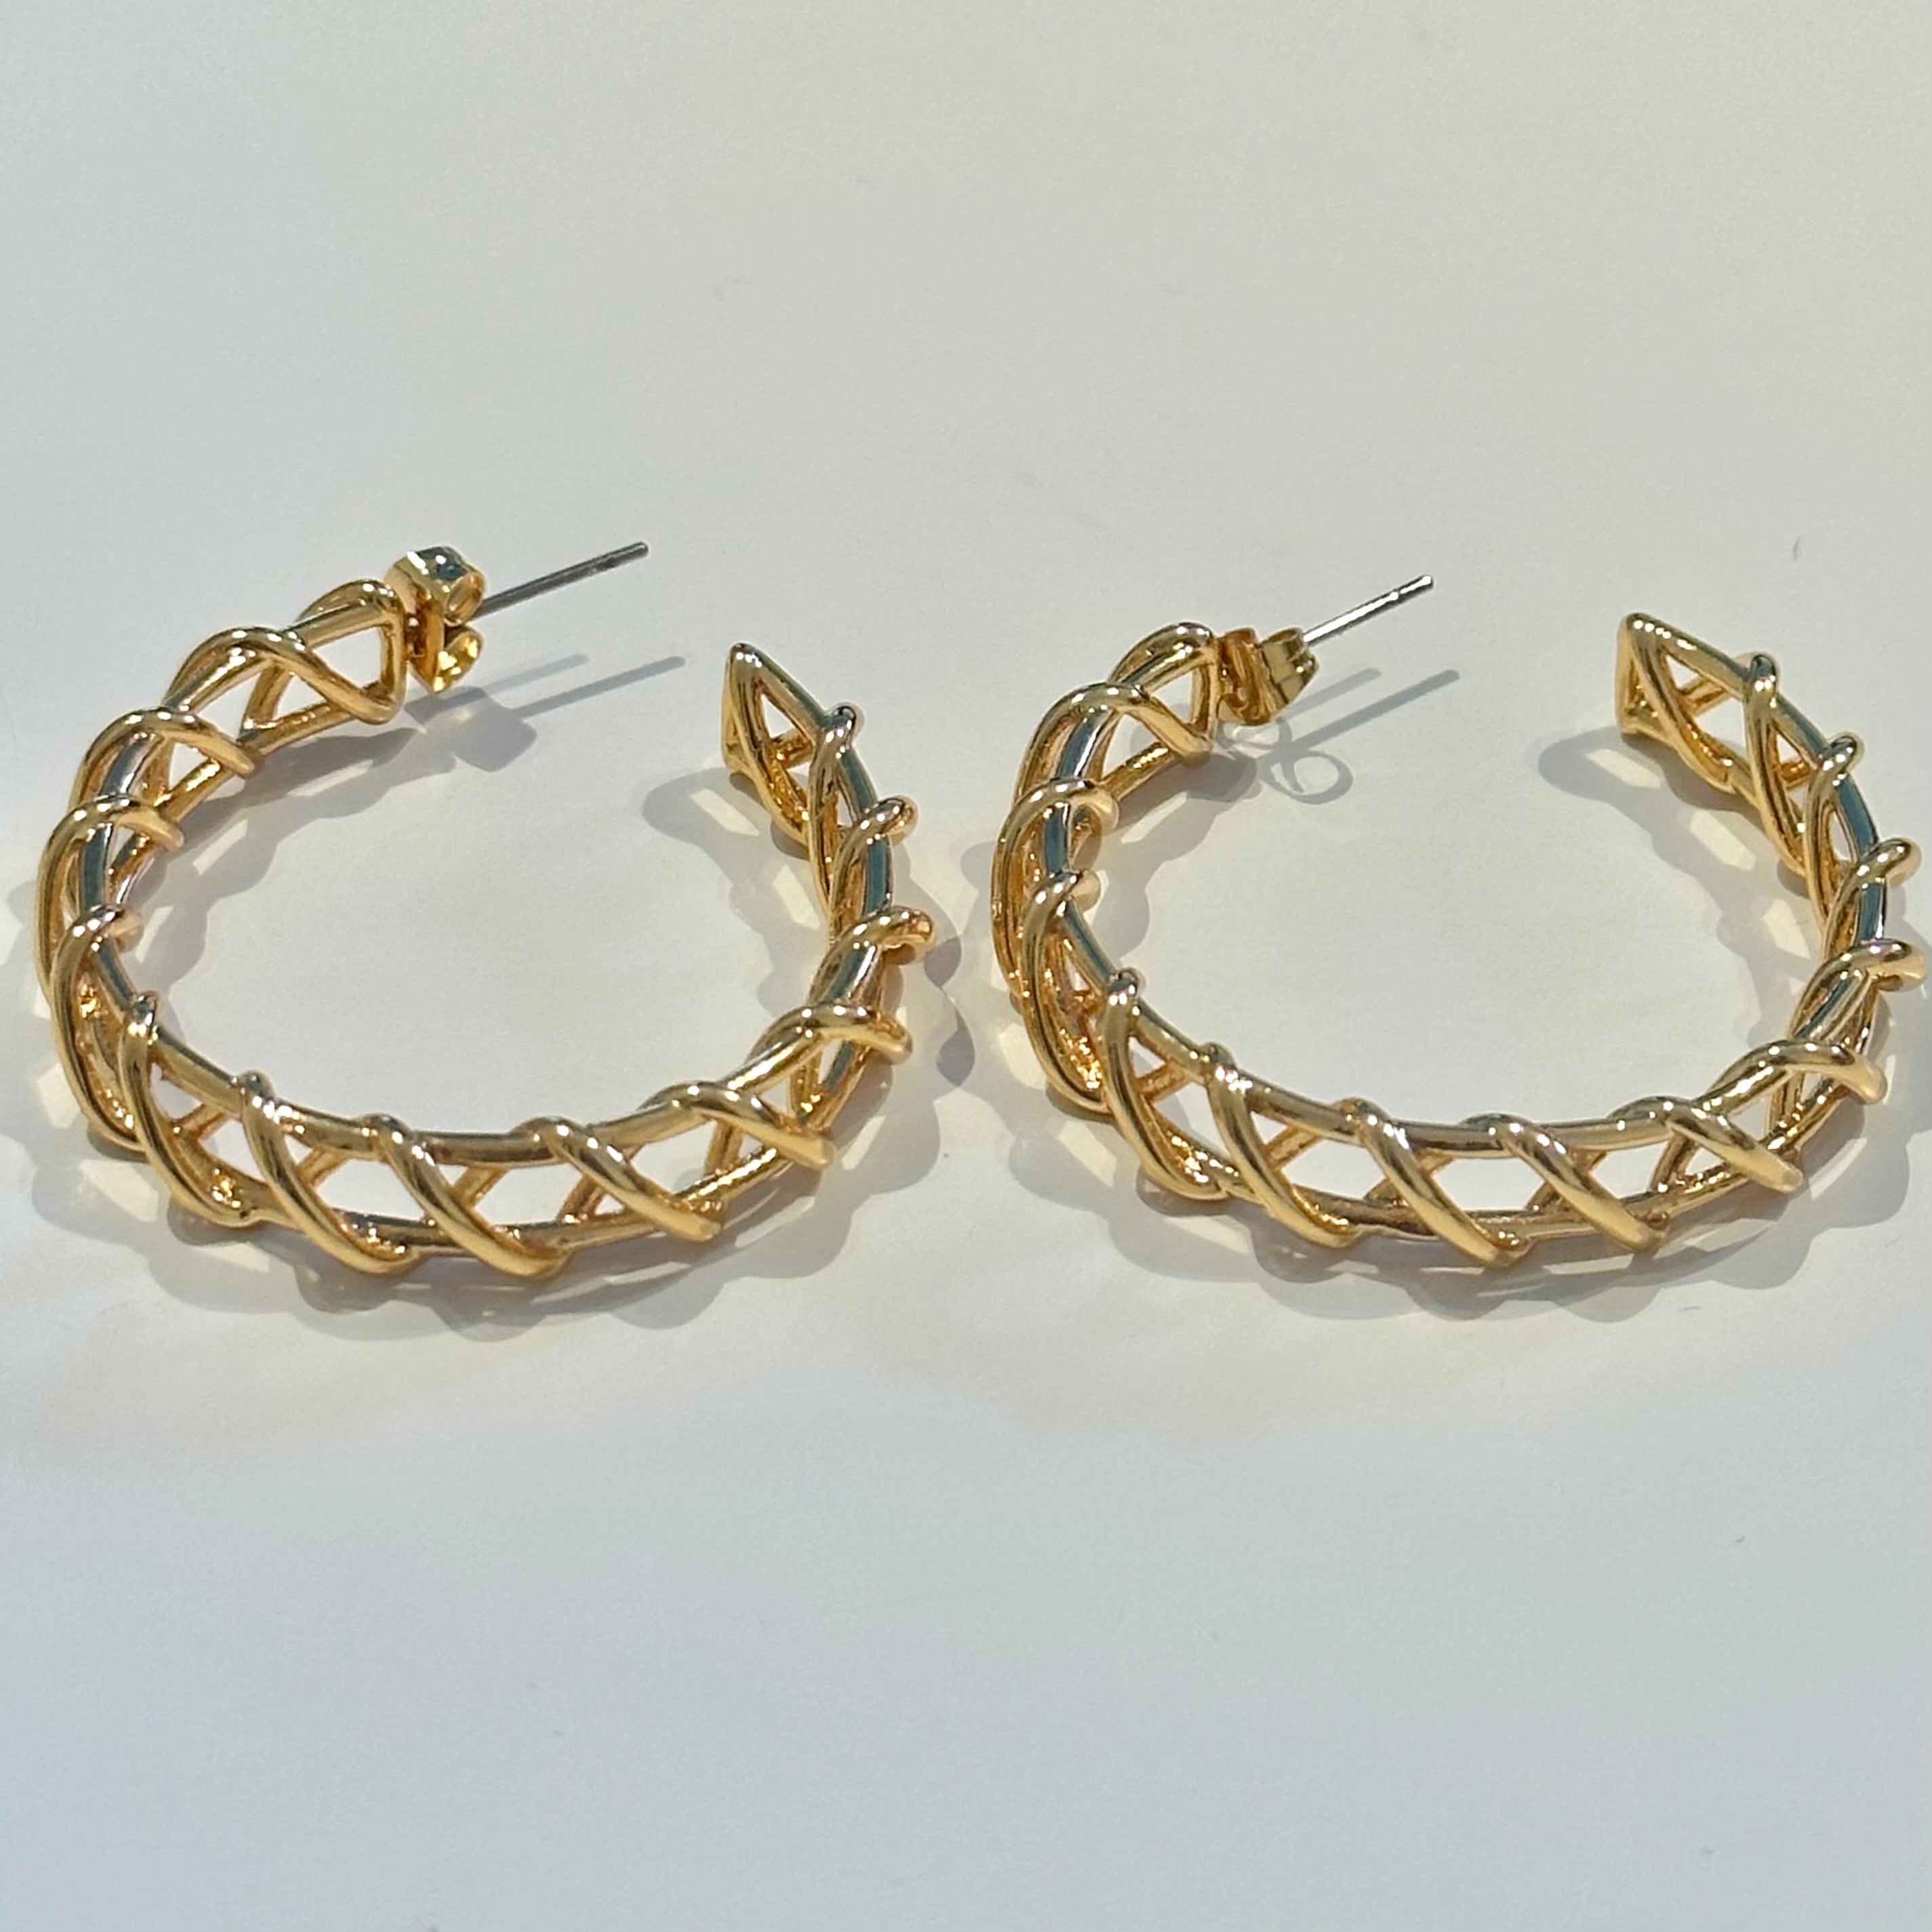 Spiral Wire Wrap Hoop Earrings in 18k Gold Plated Brass - The Gigi Hoops